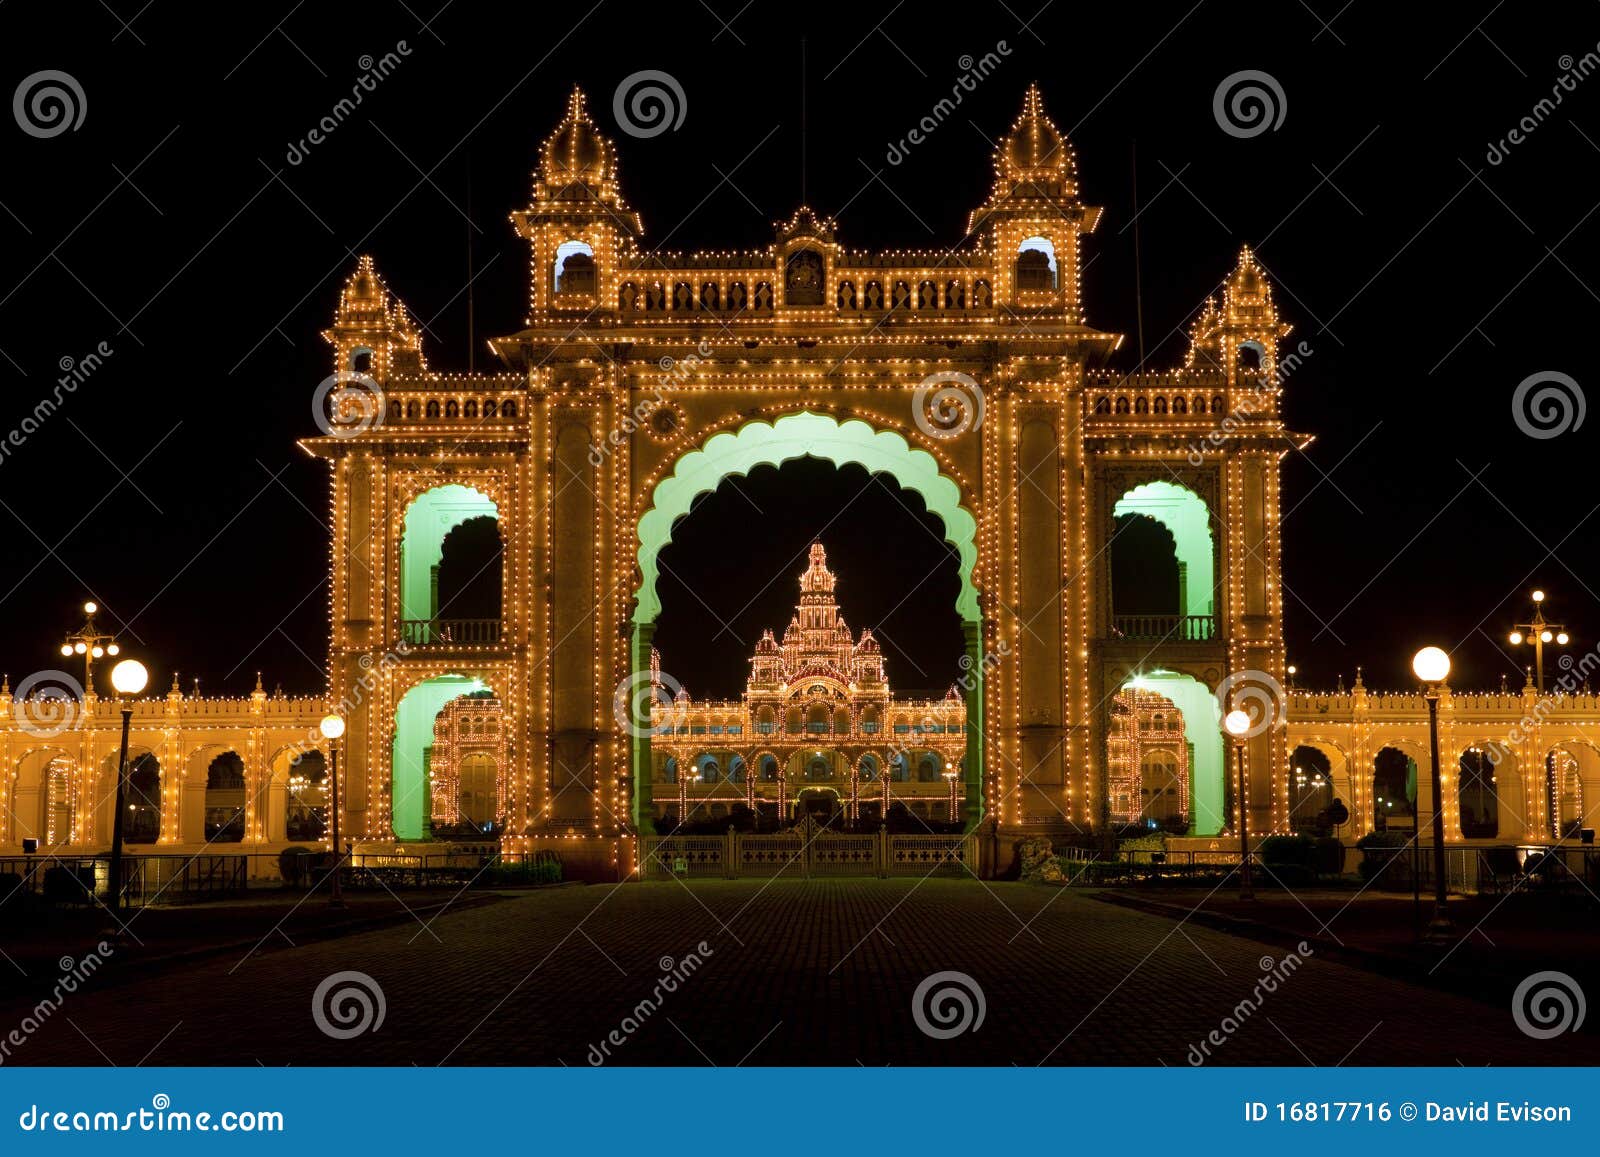 mysore palace at night.